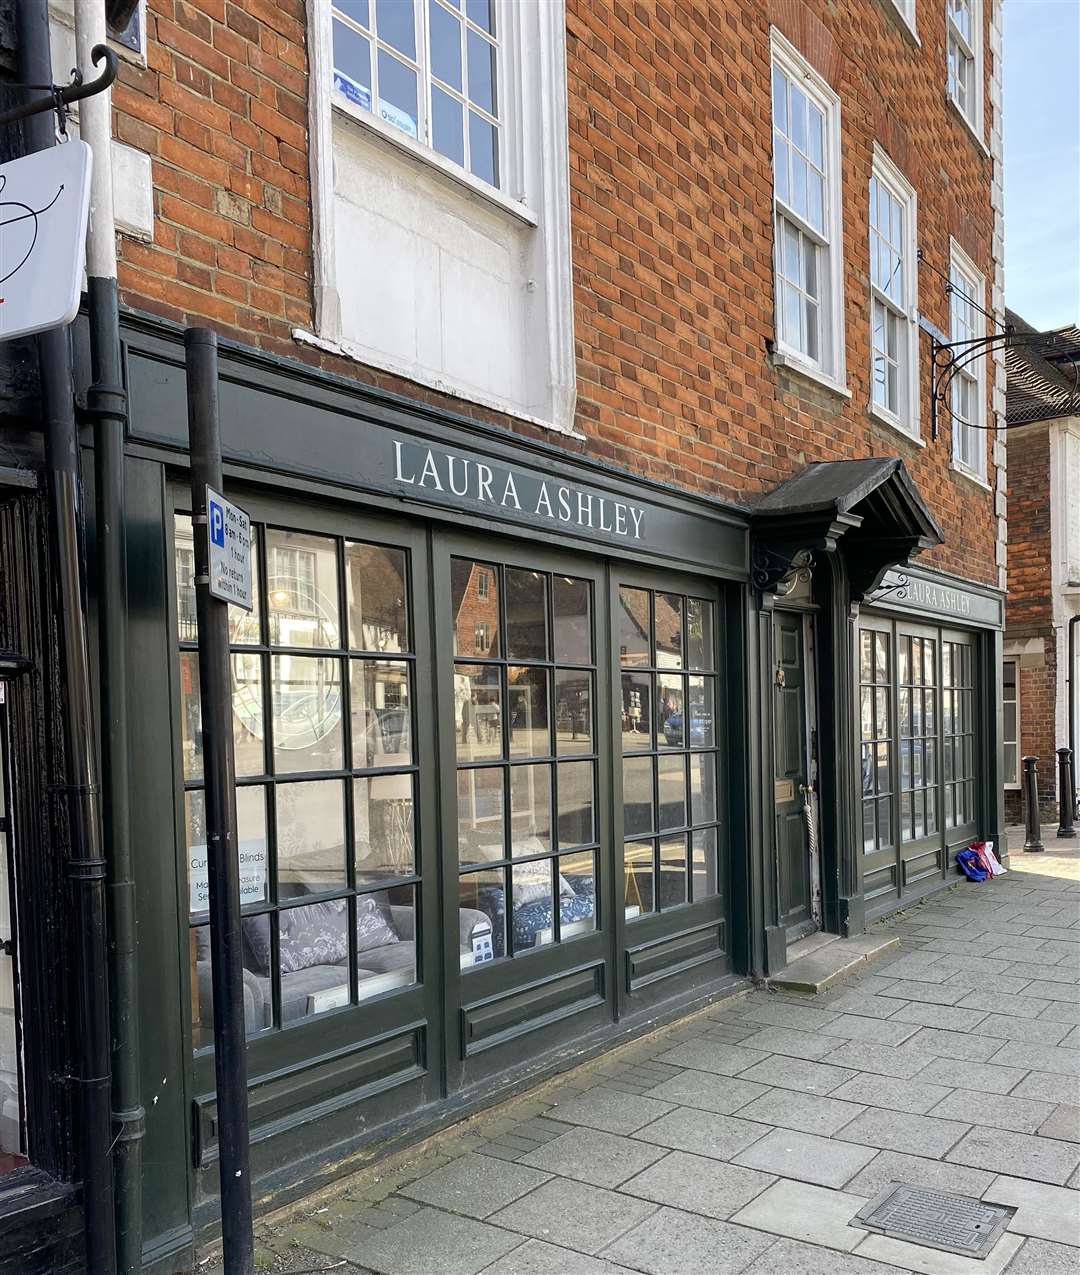 The Laura Ashley shop in Tenterden was still open earlier today